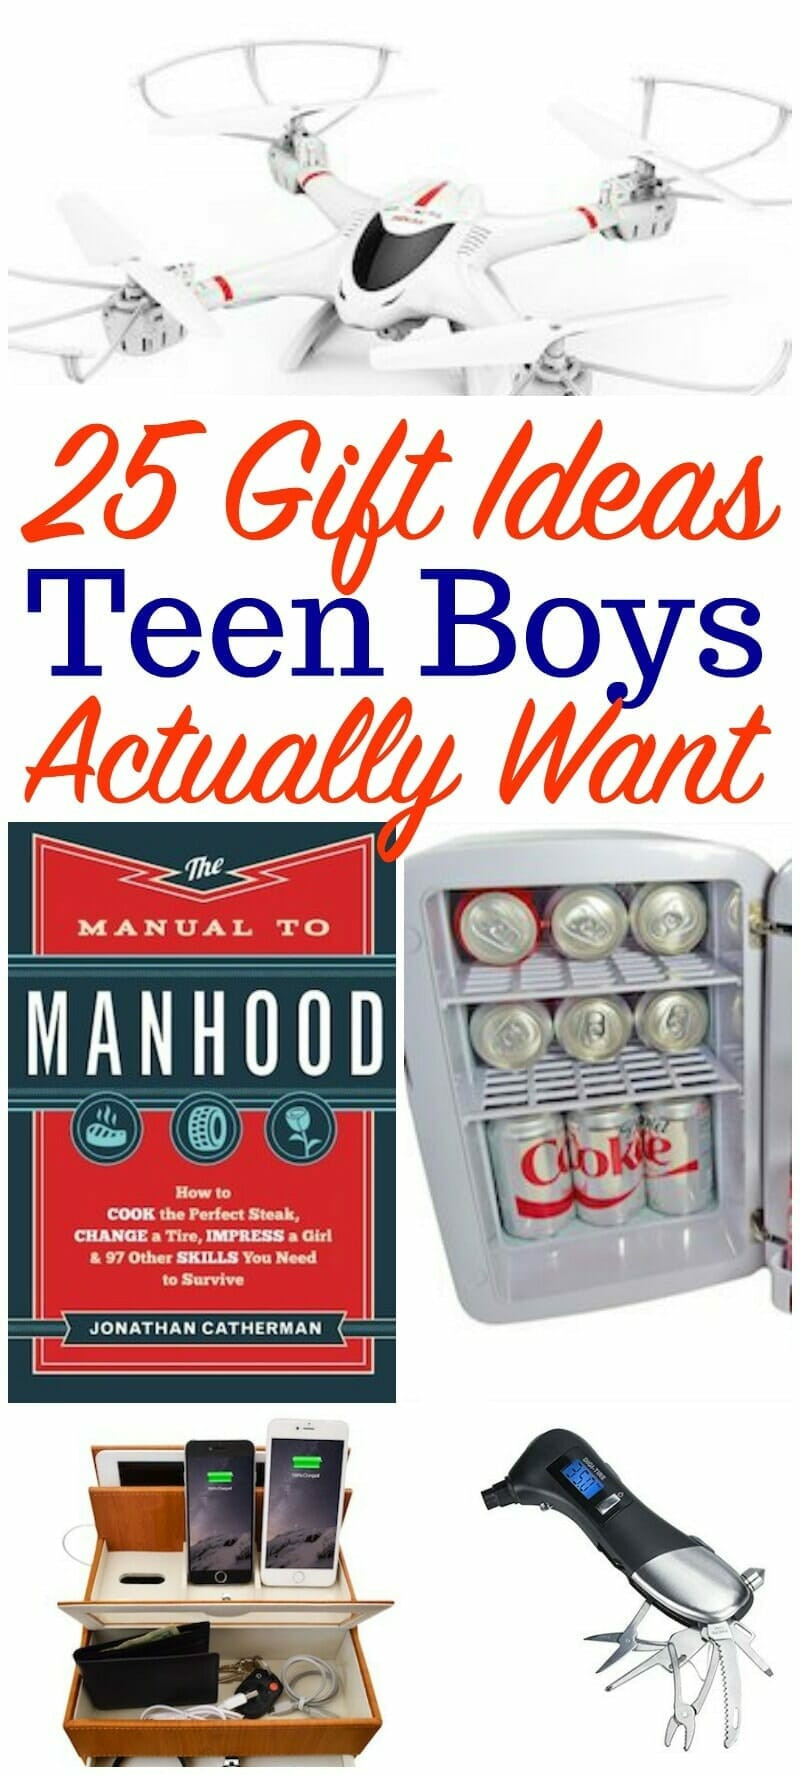 Gift Ideas For Tween Boys
 25 Teen Boy Gift Ideas Perfect for Christmas or Birthday